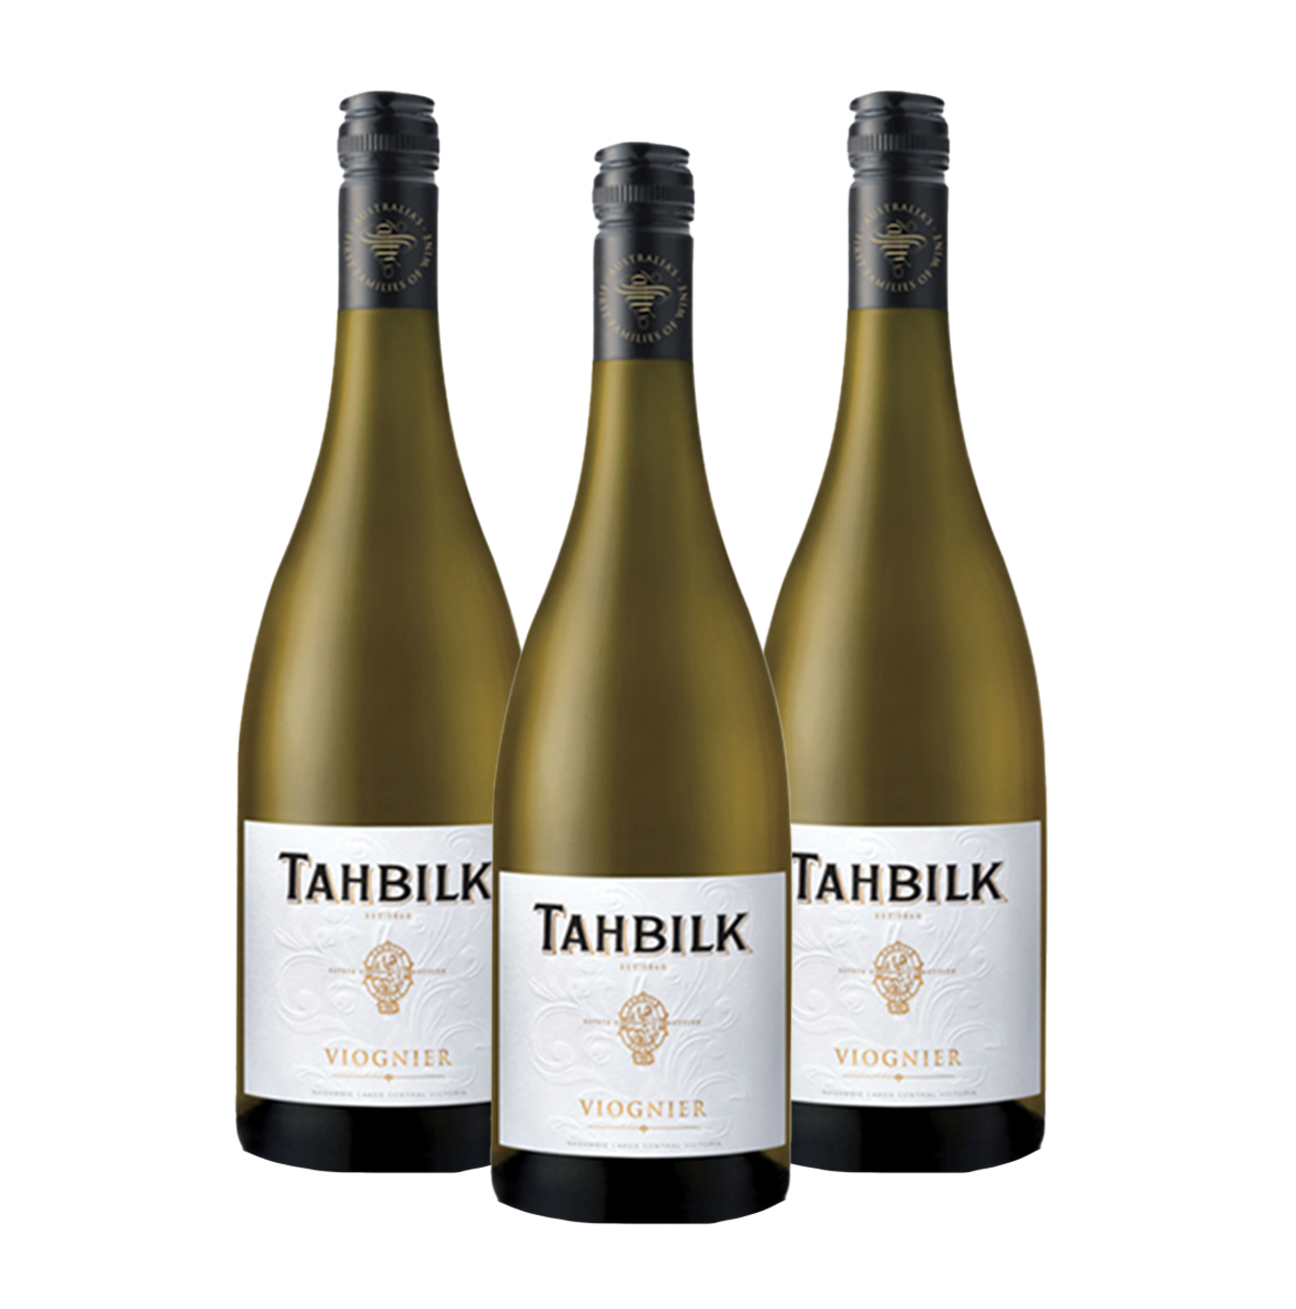 2019 Chateau Tahbilk - Viognier Nagambie Lakes (3 Bottle Case - Standard Bottles)